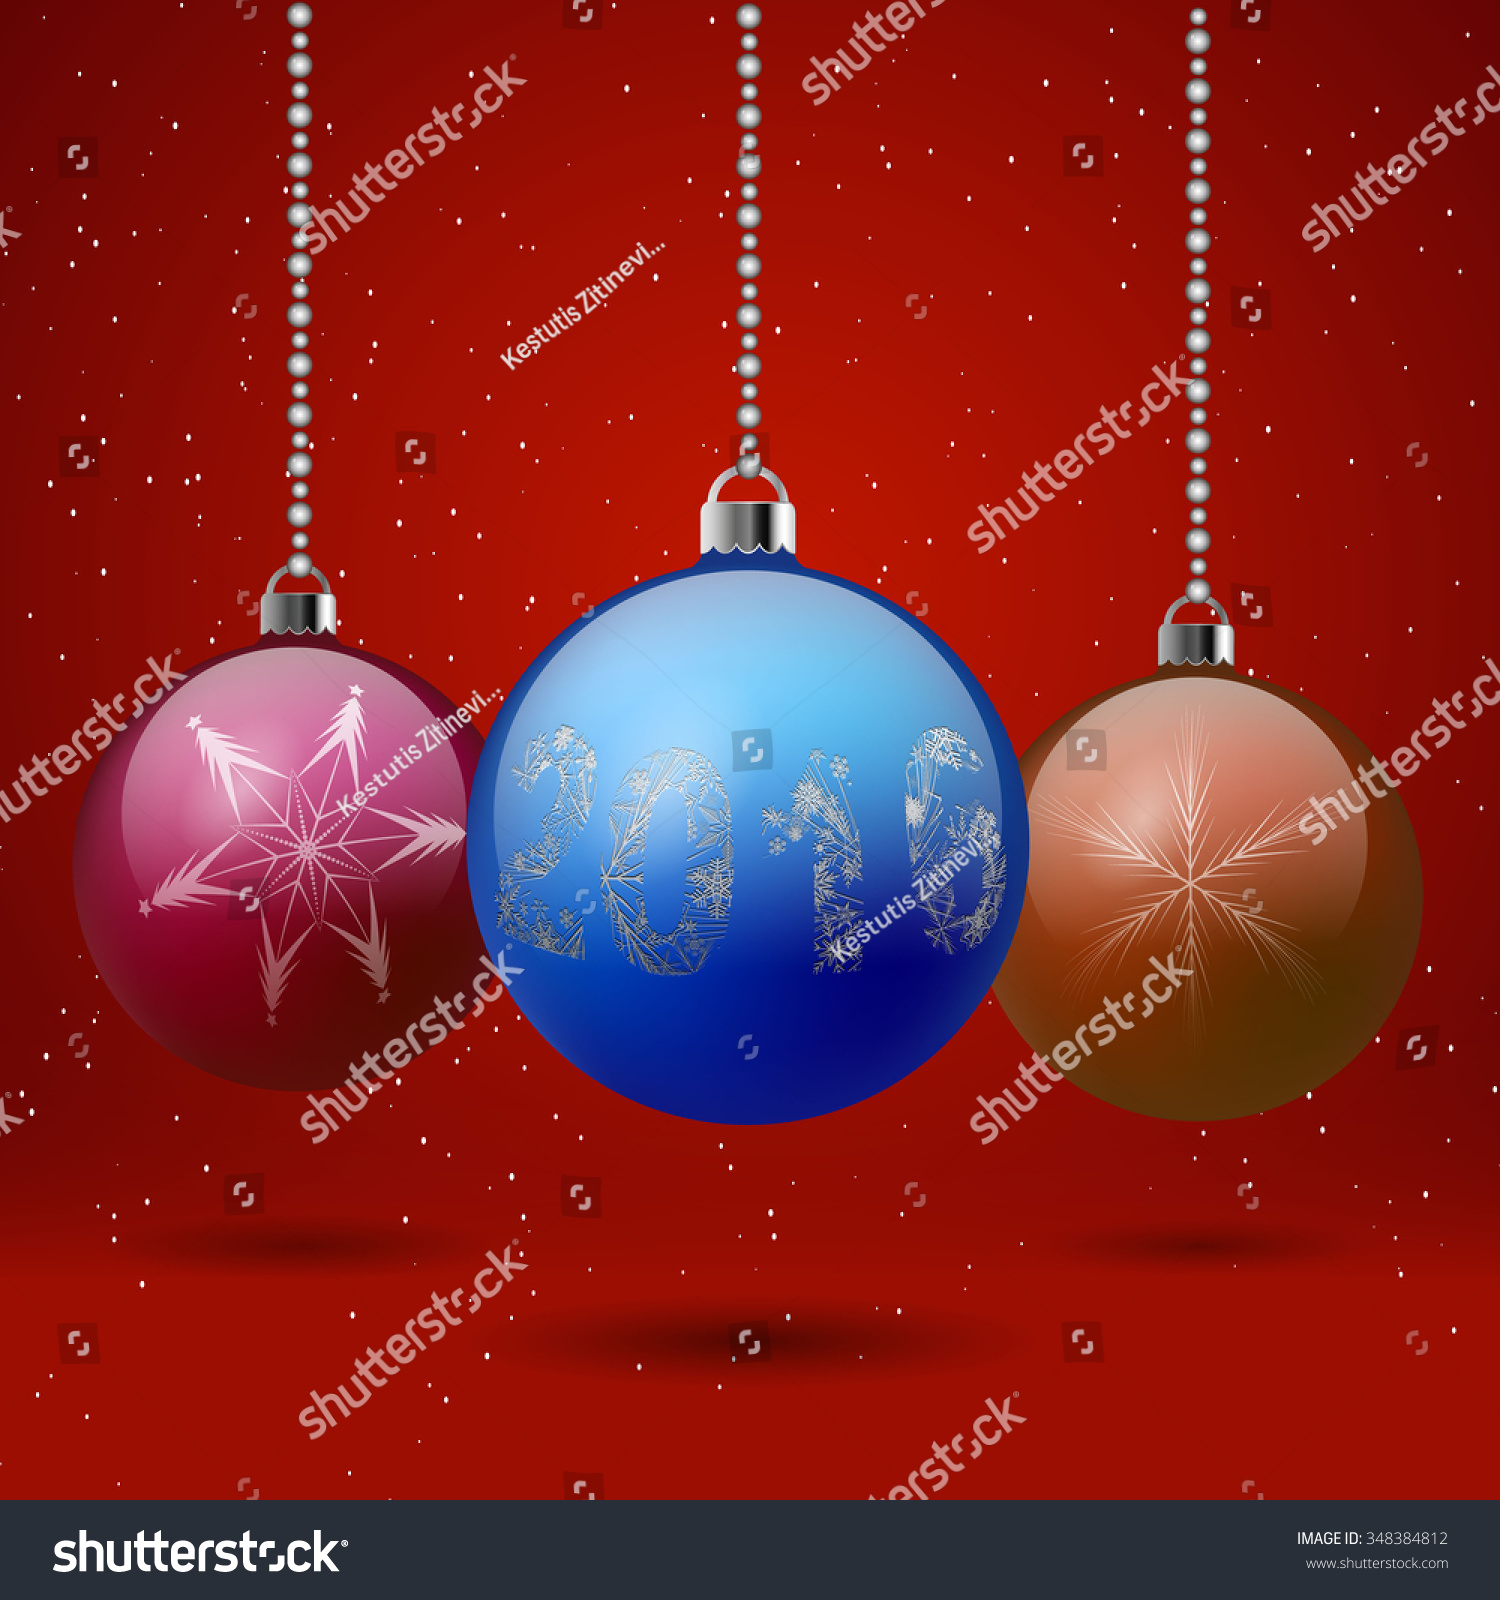 Vector Illustration Of Christmas Balls. - 348384812 : Shutterstock